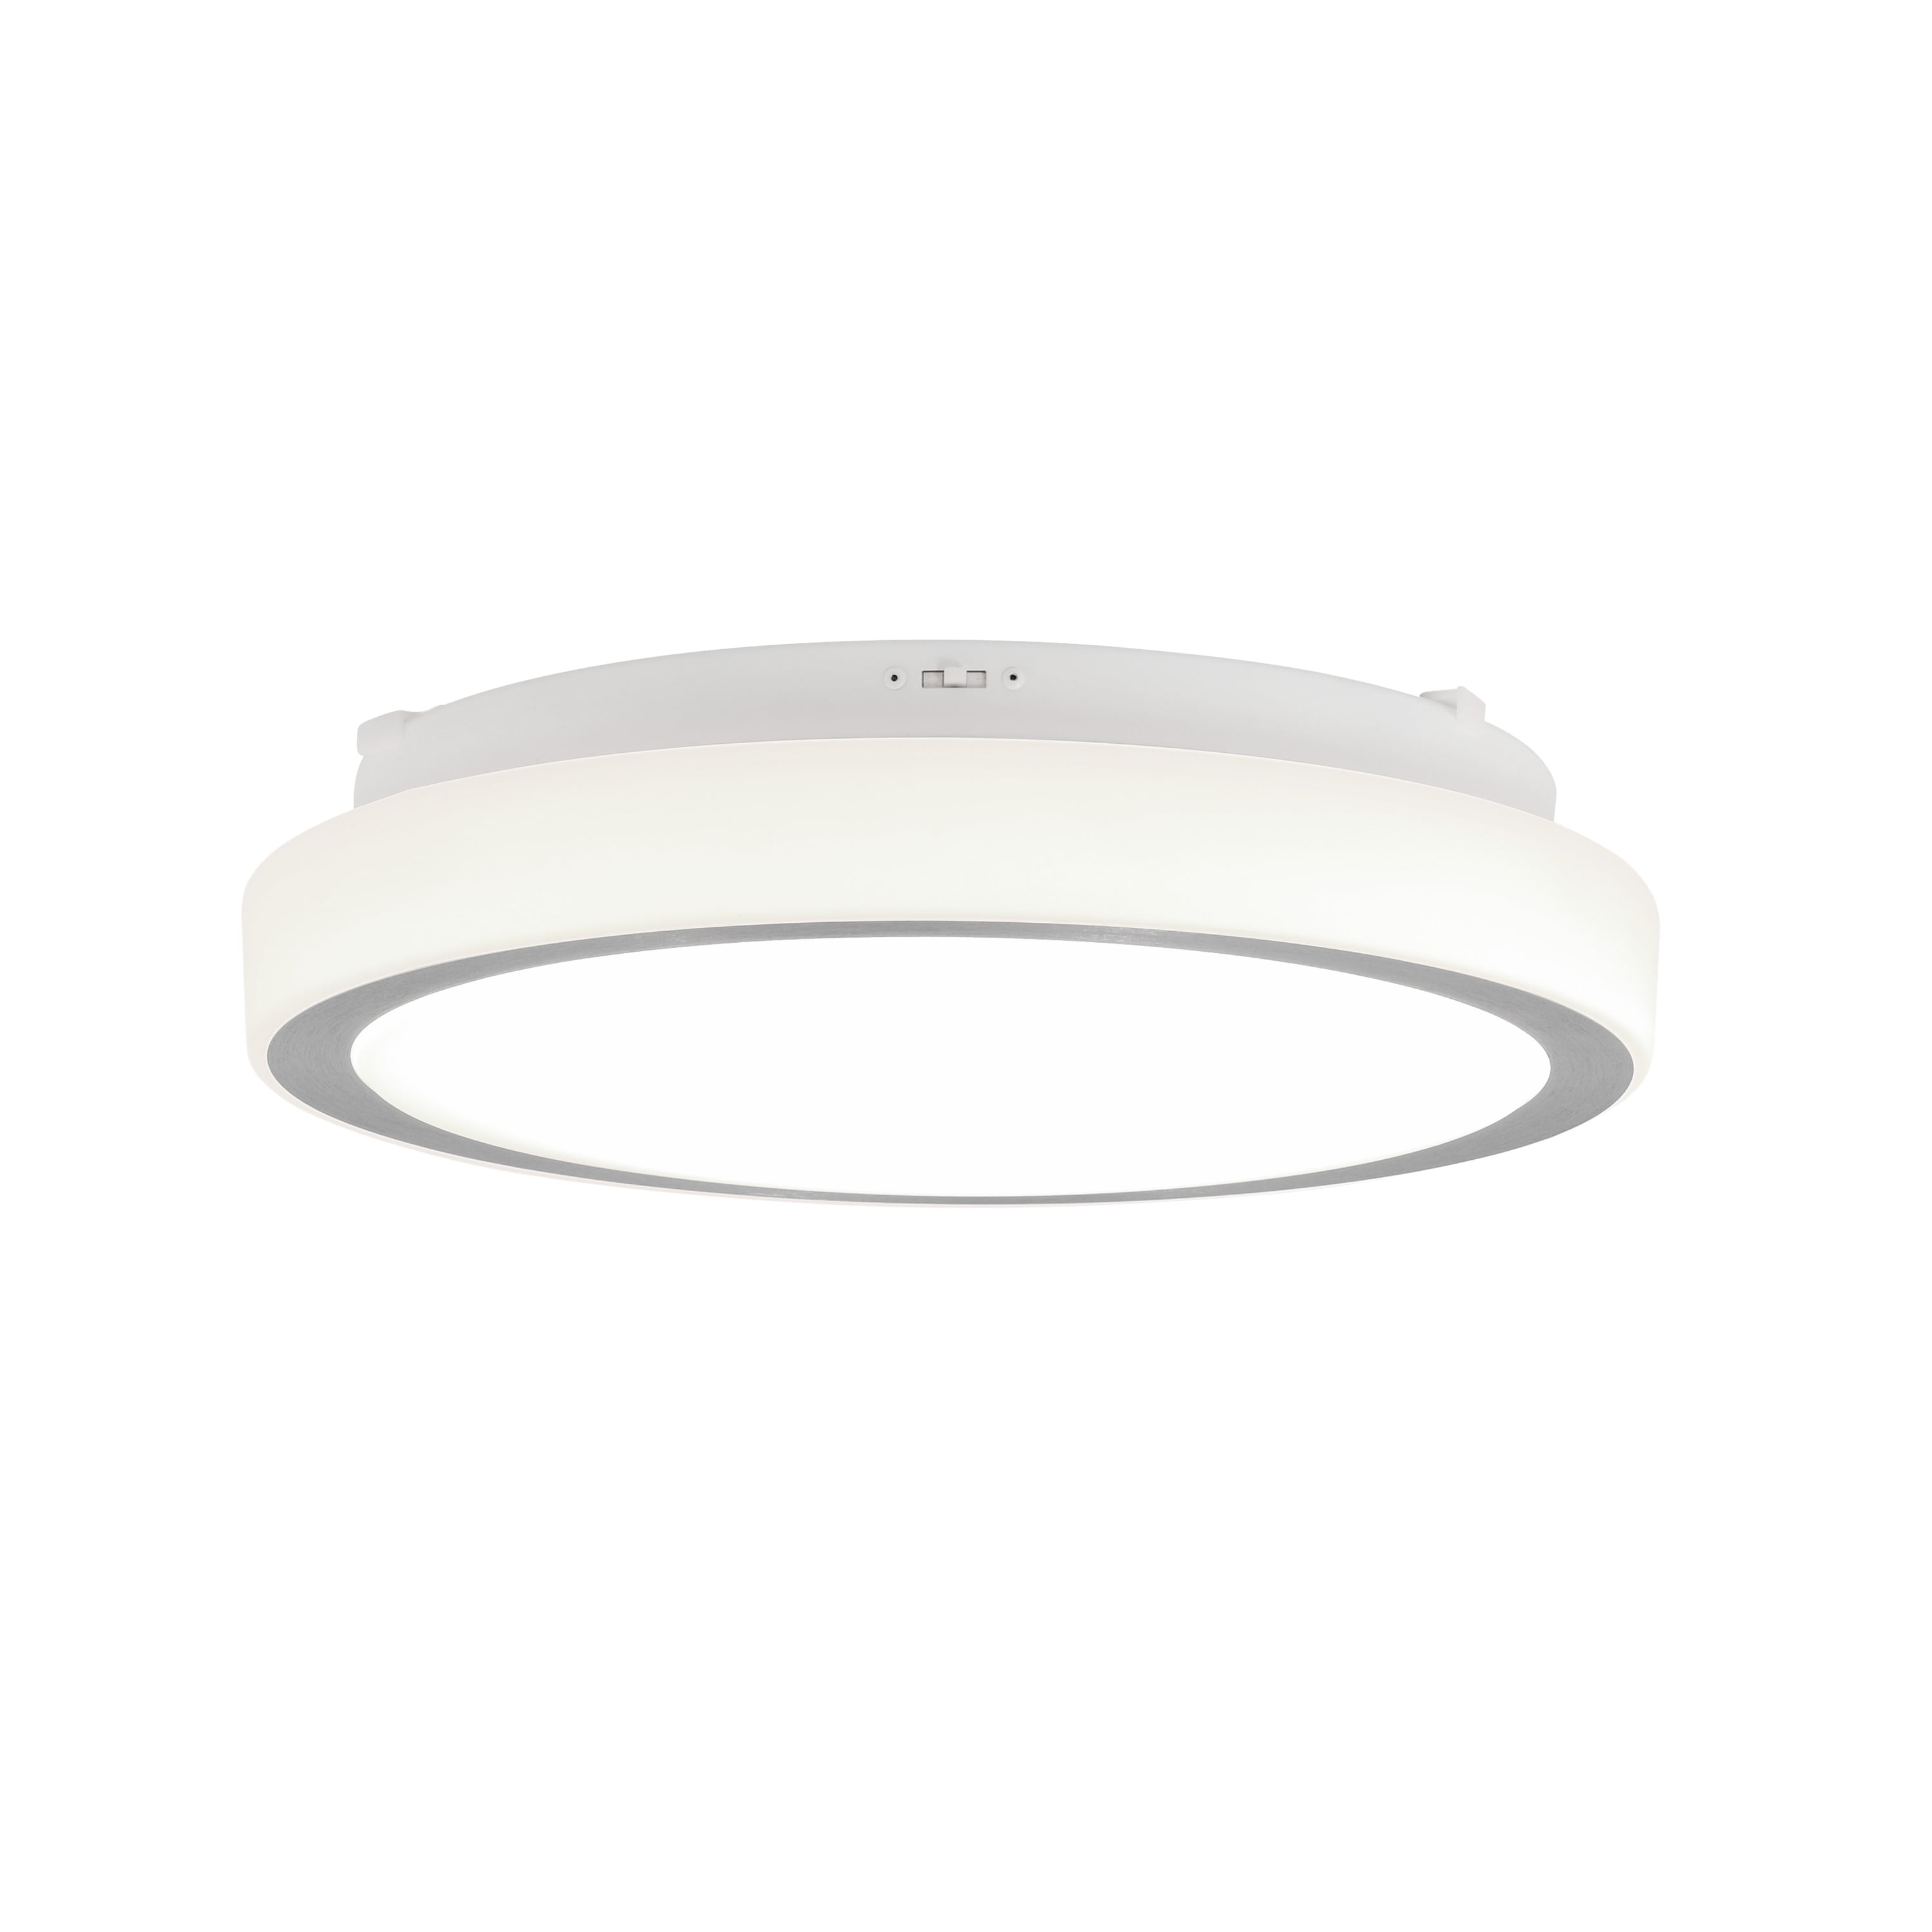 3x Artika Saturn LED Ceiling Light Fixture with 3 Adjustable Light Colours 